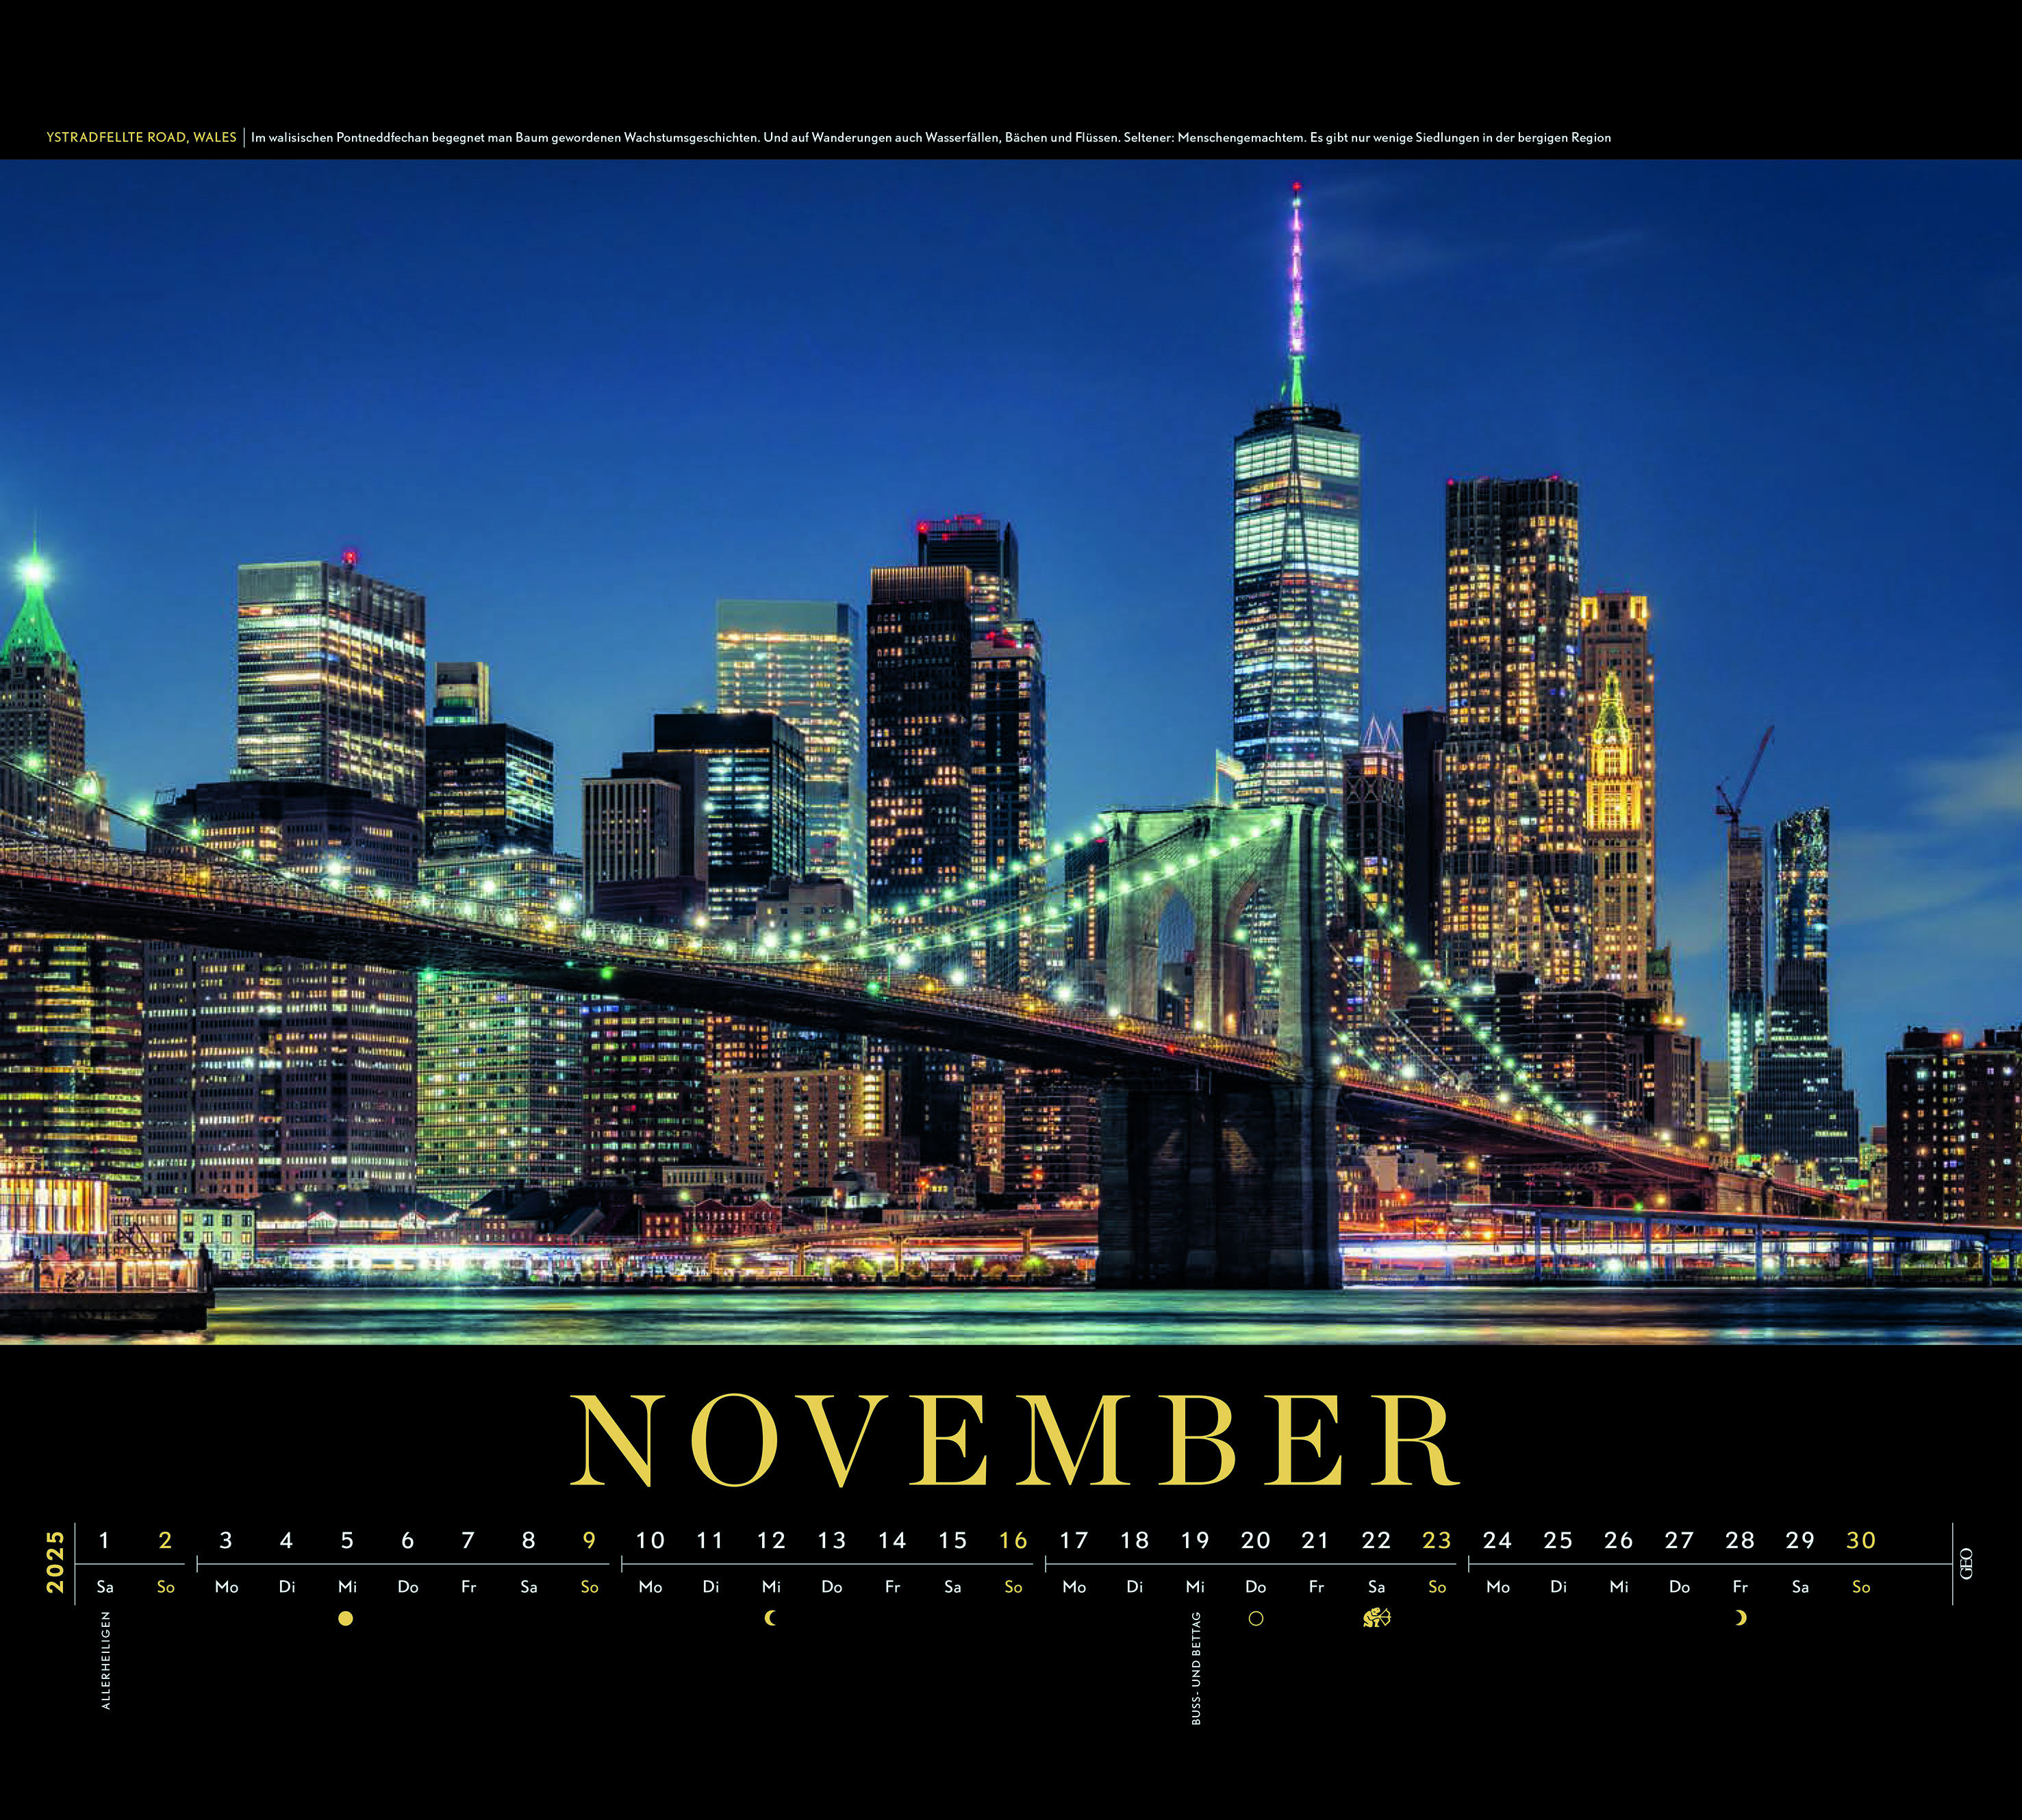 Kalender "New York" 2025